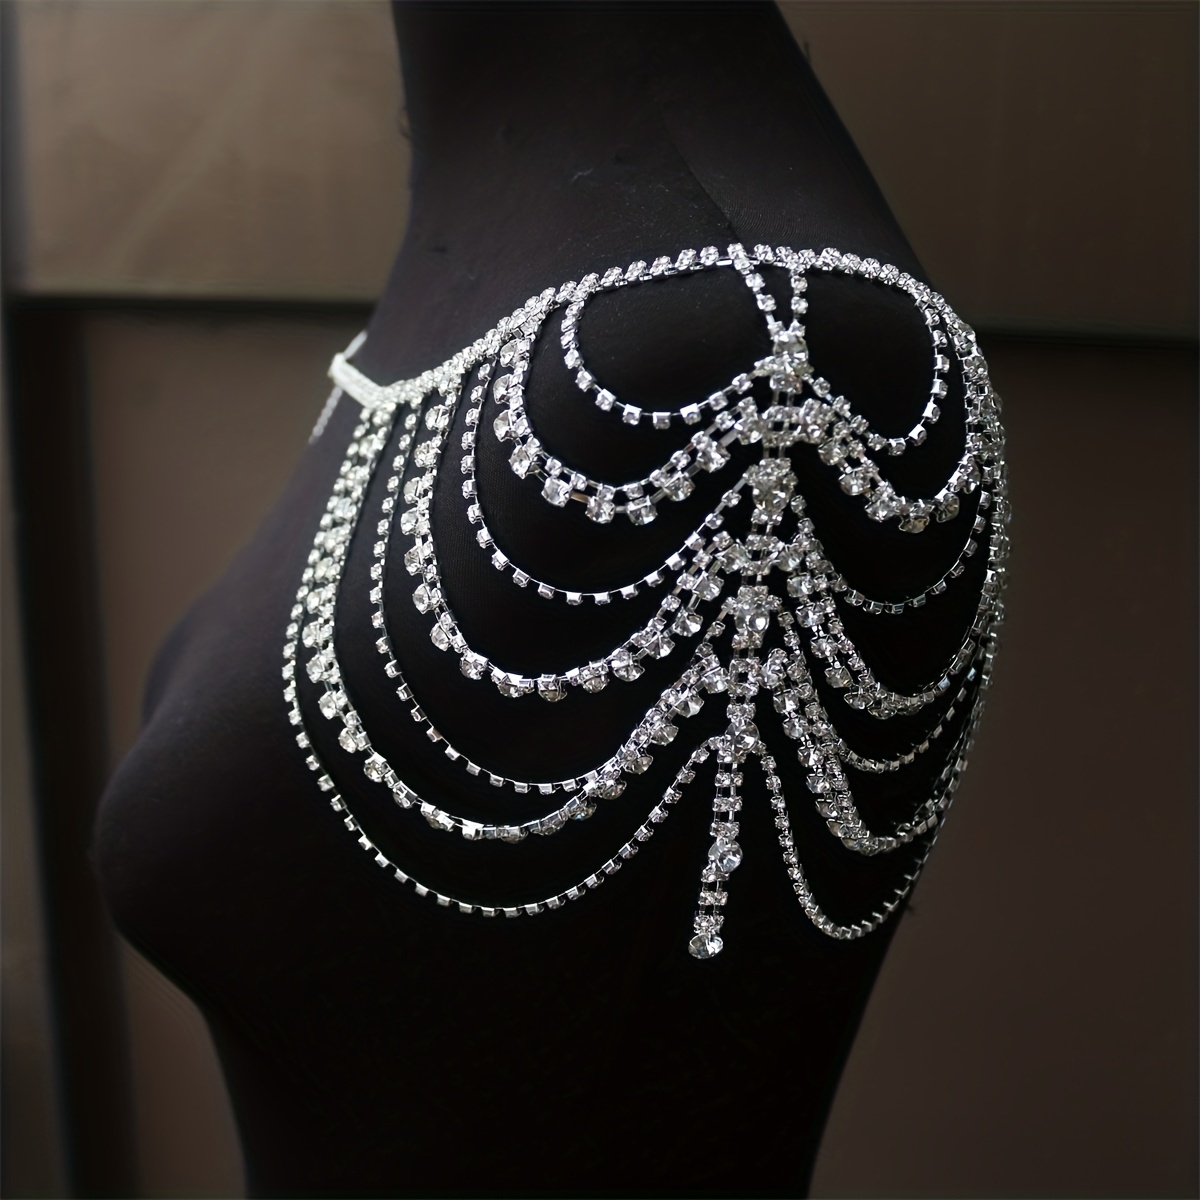  Rhinestone Body Chains Jewelry For Women And Girls